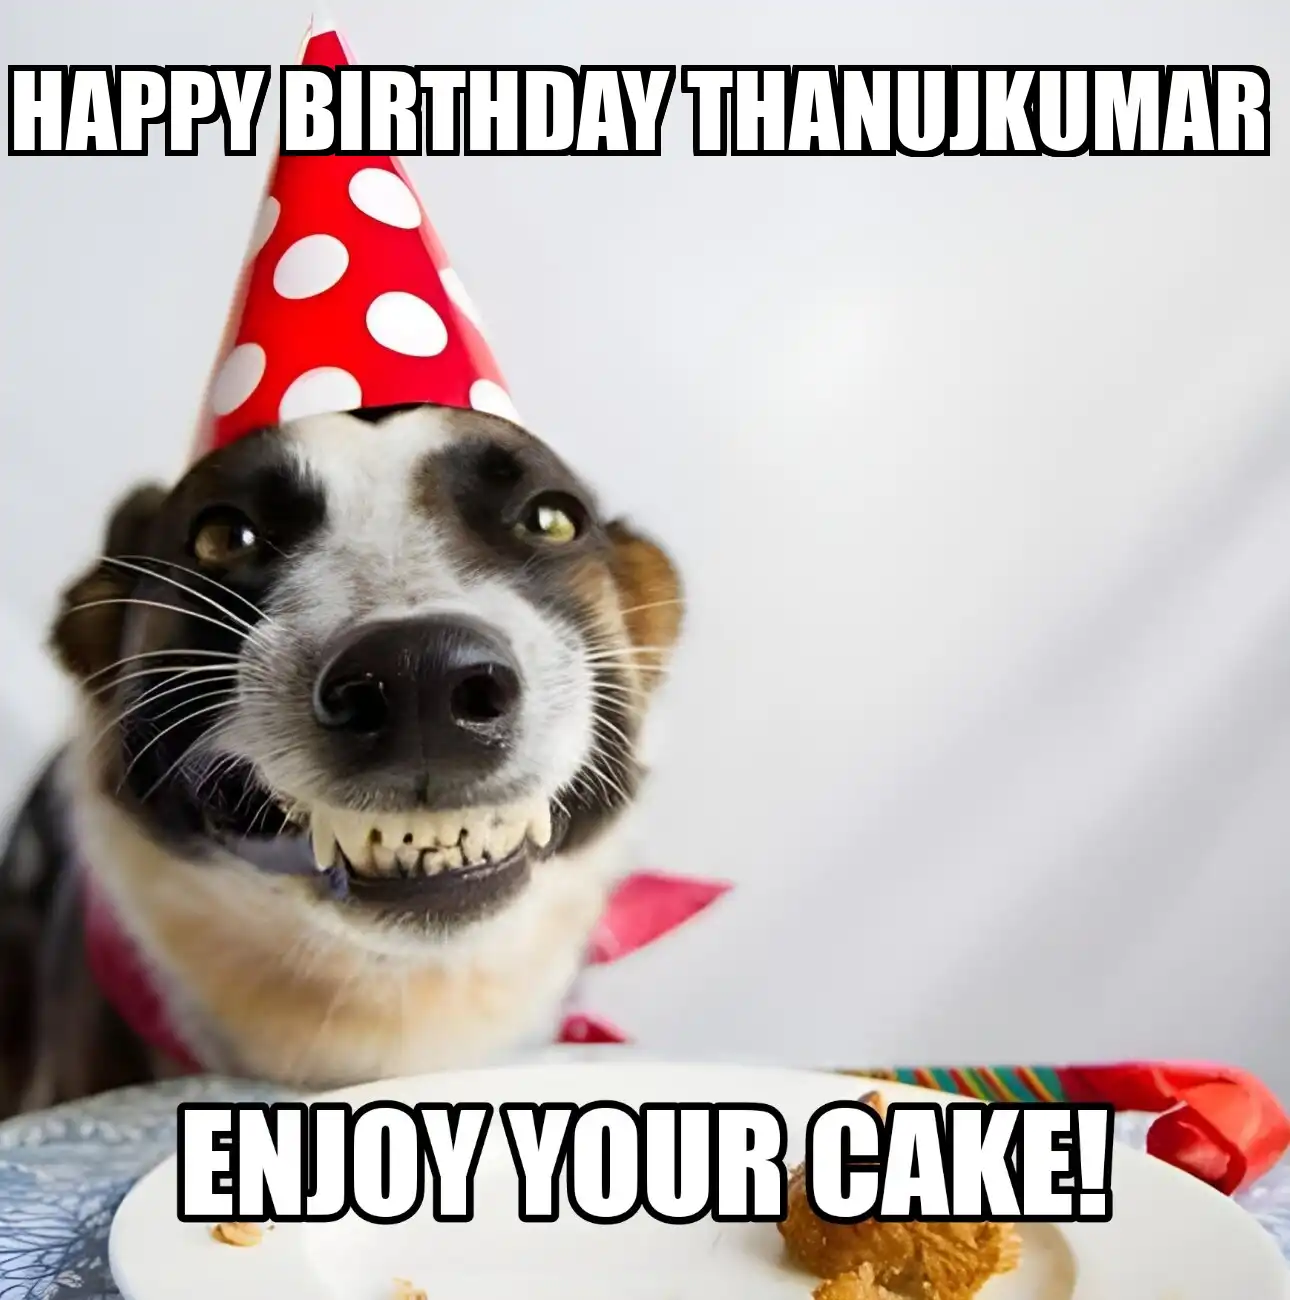 Happy Birthday Thanujkumar Enjoy Your Cake Dog Meme